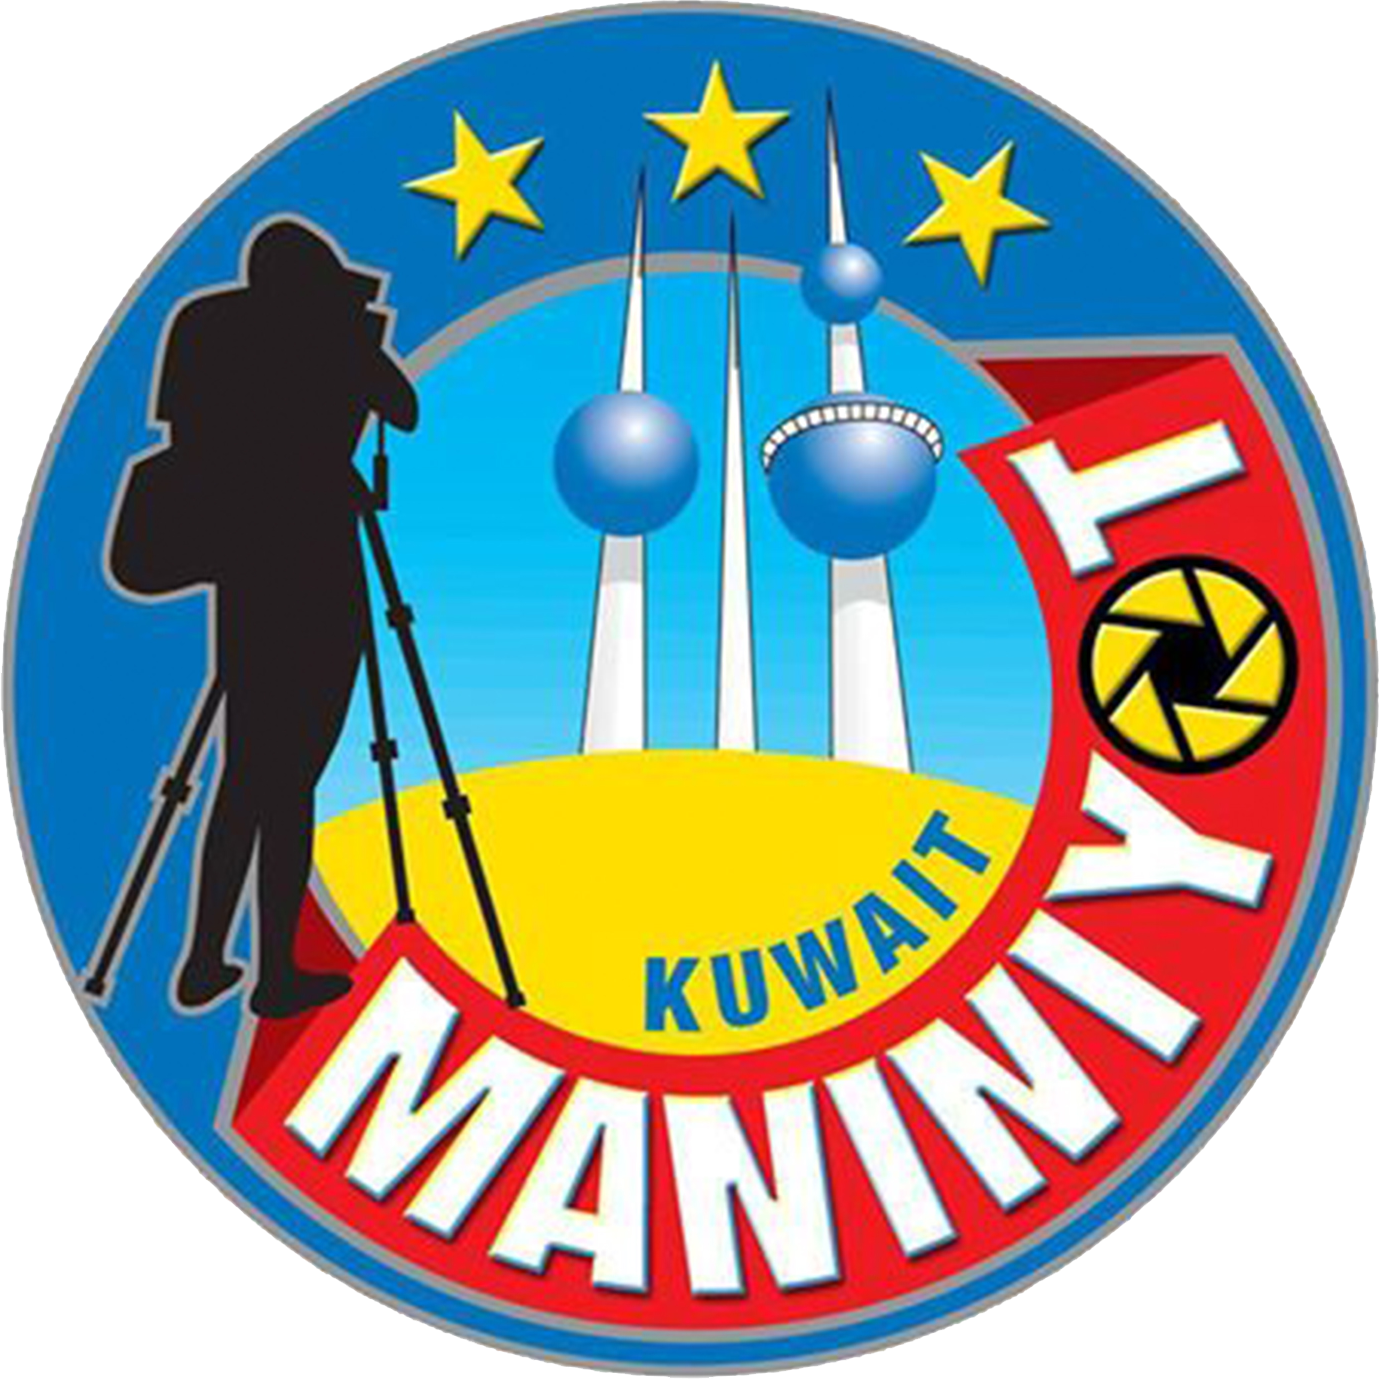 Maniniyot Kuwait